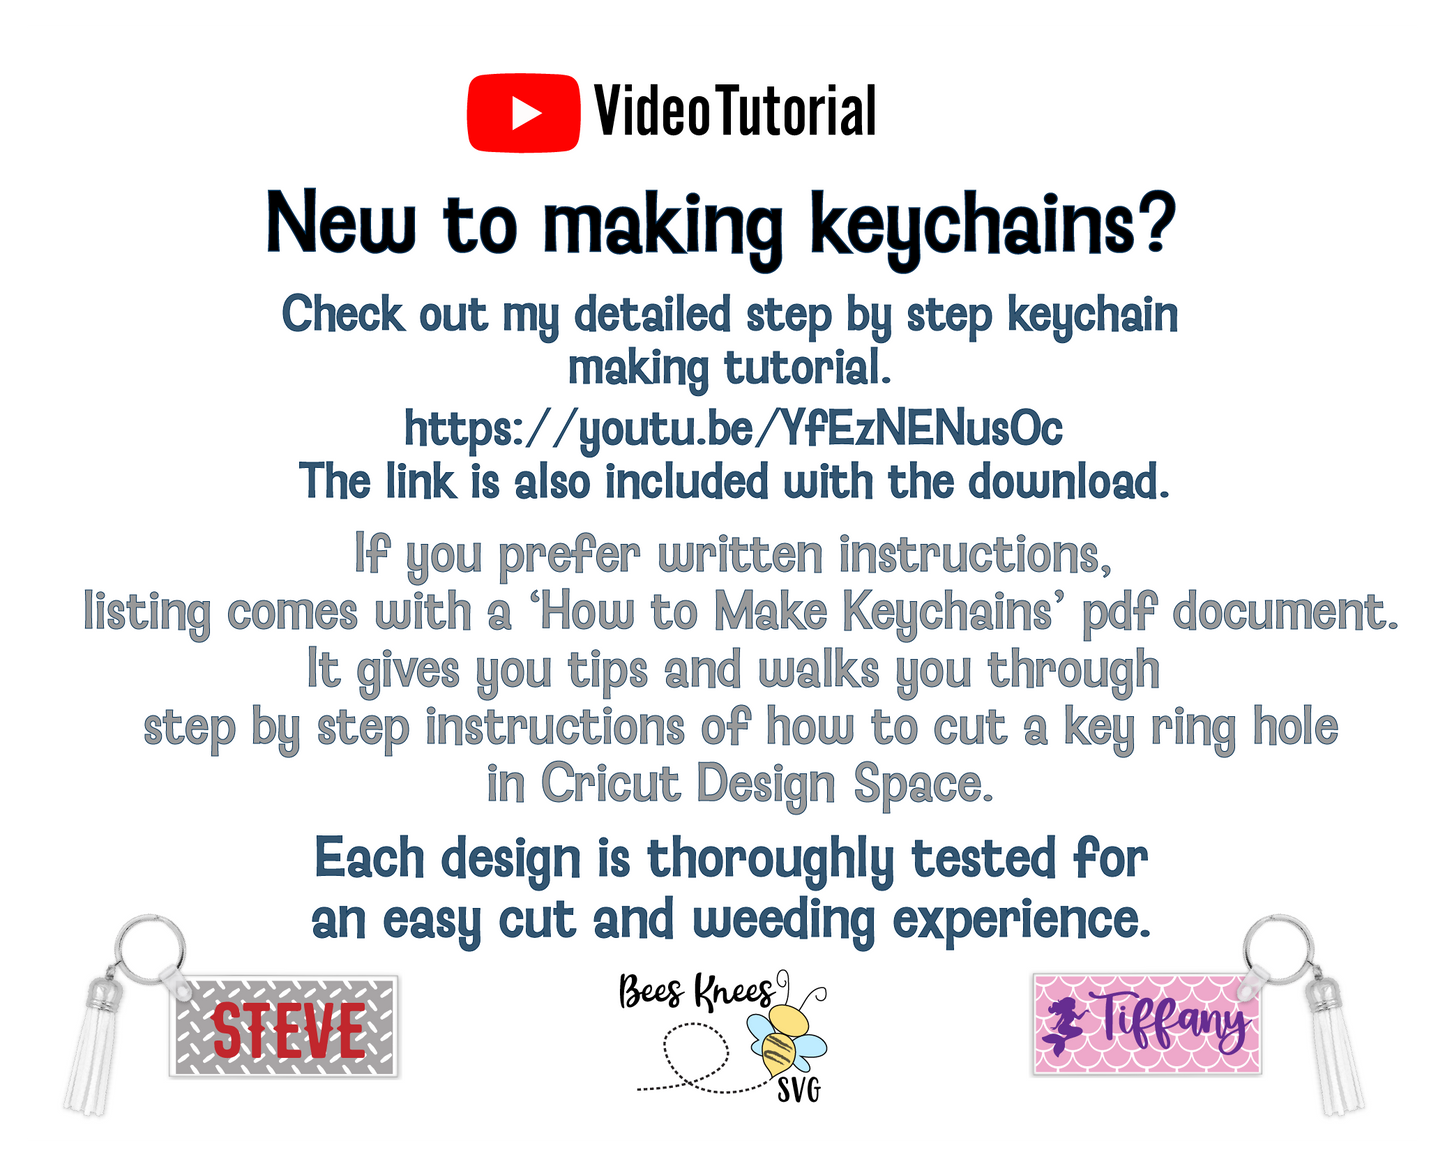 Rectangle Pattern Keychain 2.8" x 1.2" SVG Cut Files